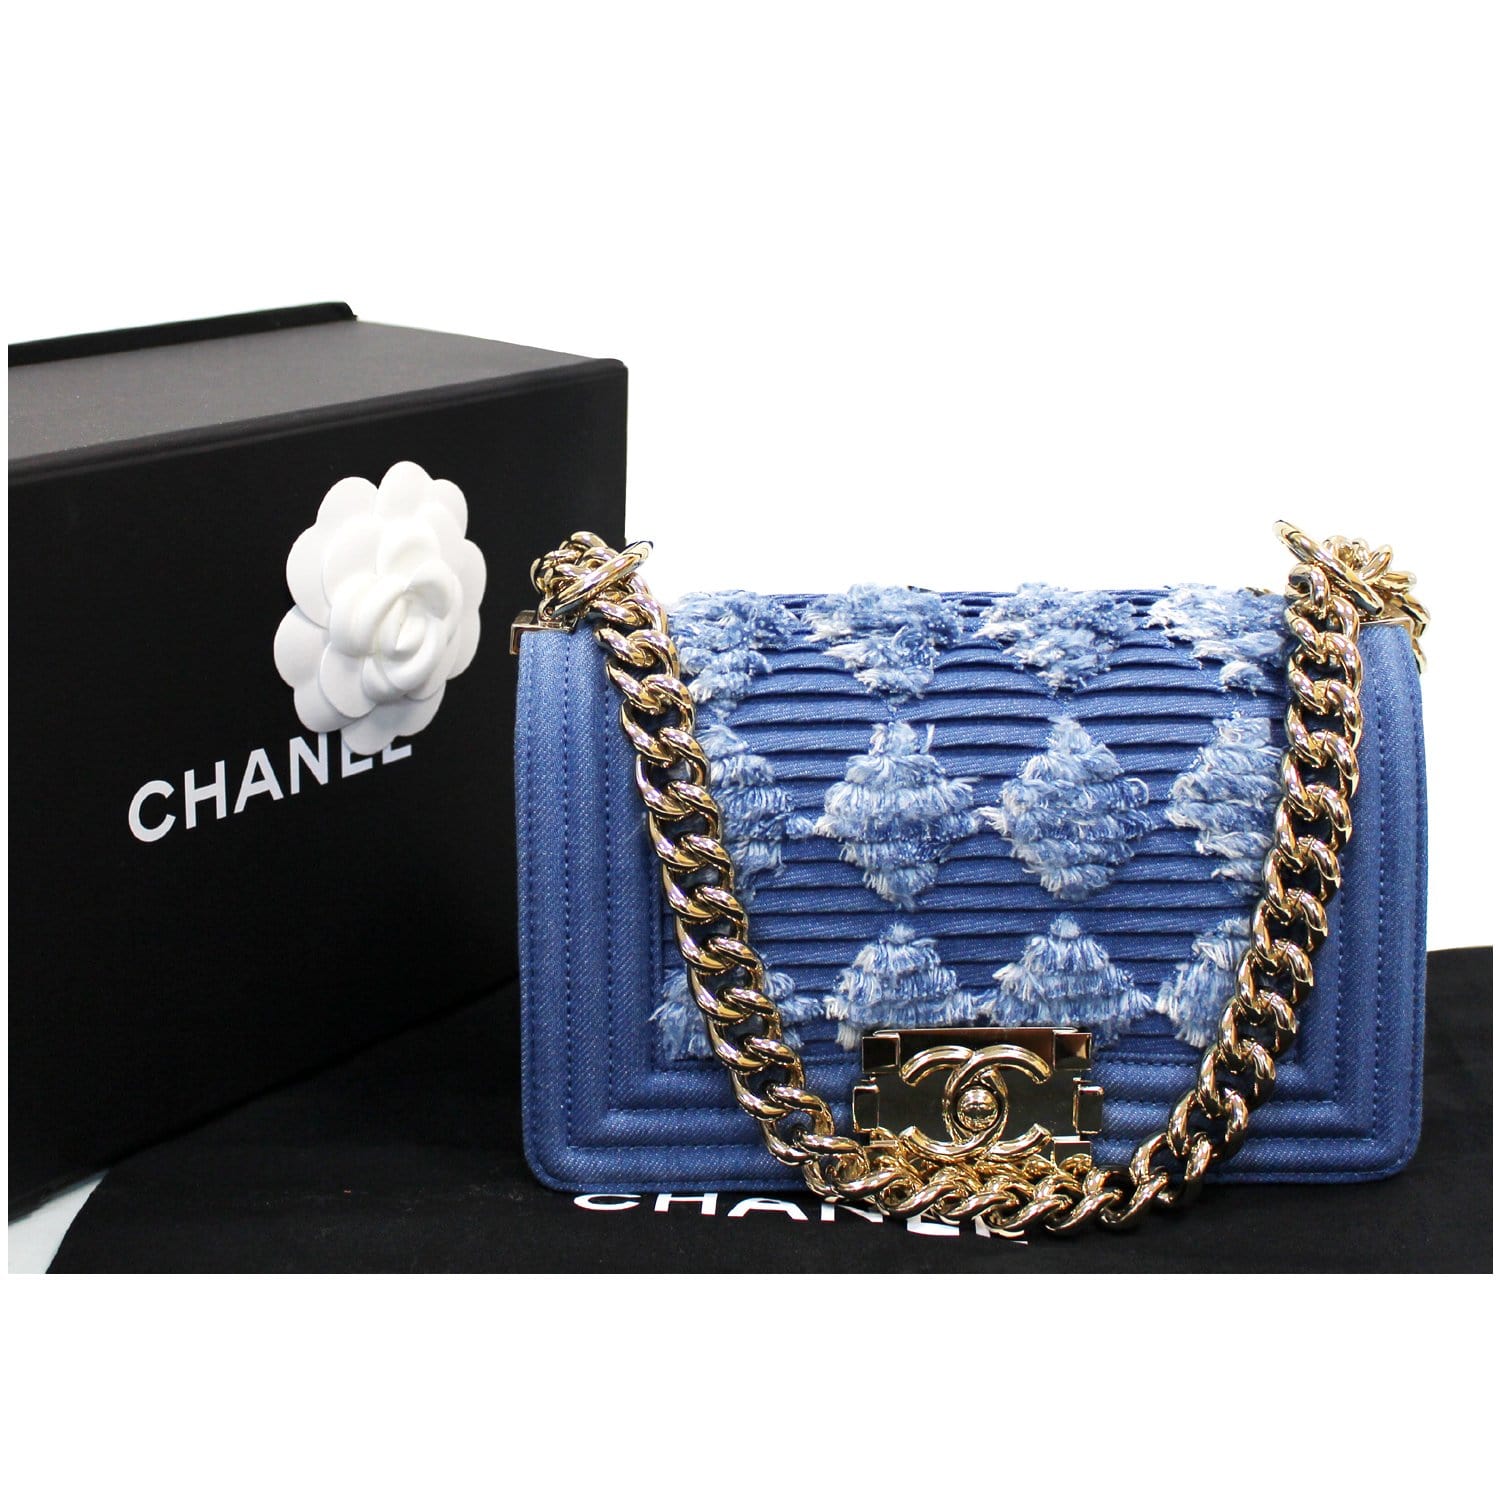 Chanel 2021 Small Destination Chenonceau Bowling Bag - Blue